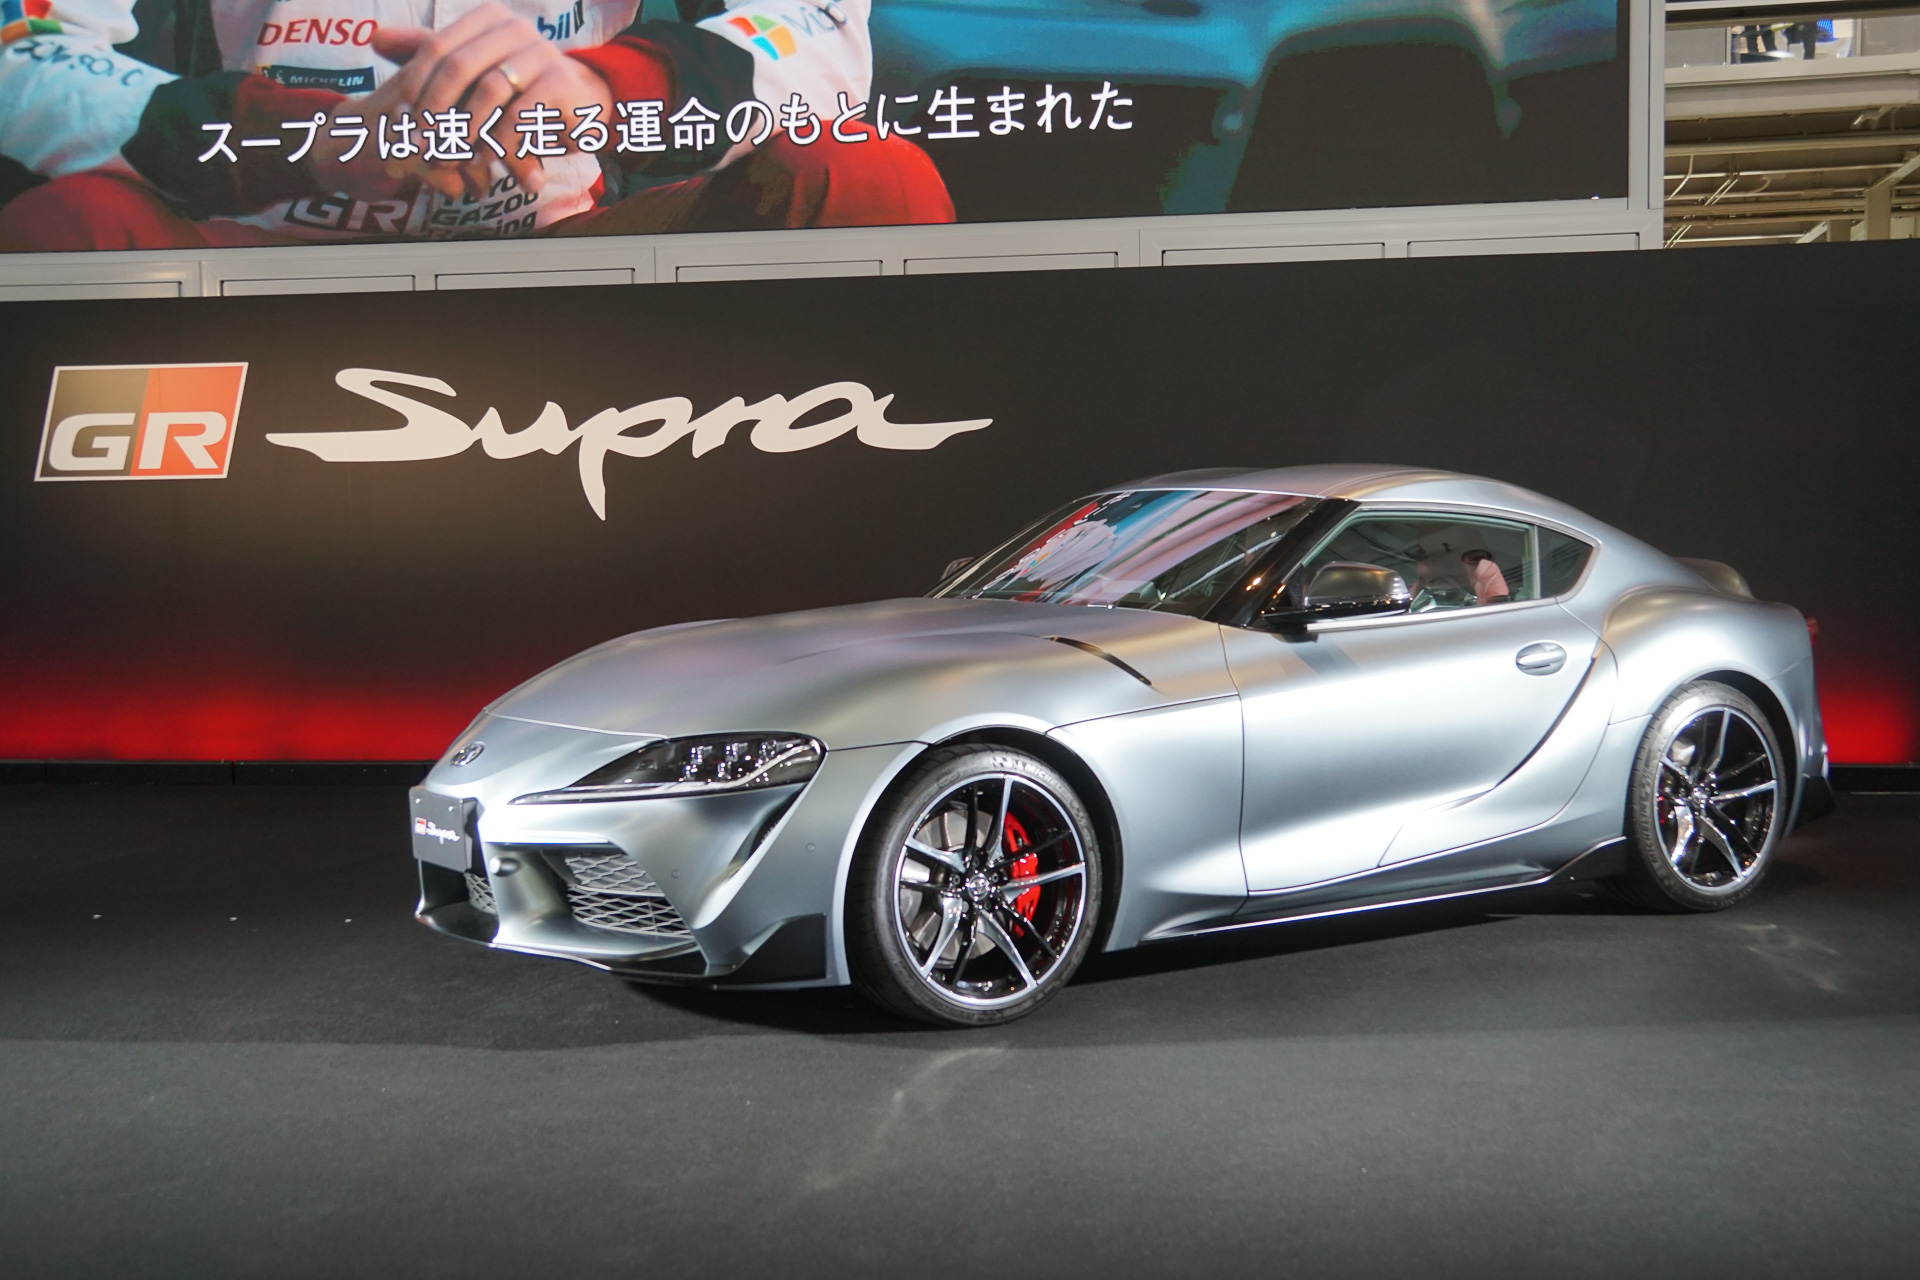 Ewell Offer winkelwagen トヨタ、新型「スープラ」登場を祝う「Supra is back to Japan Fes」 - Car Watch